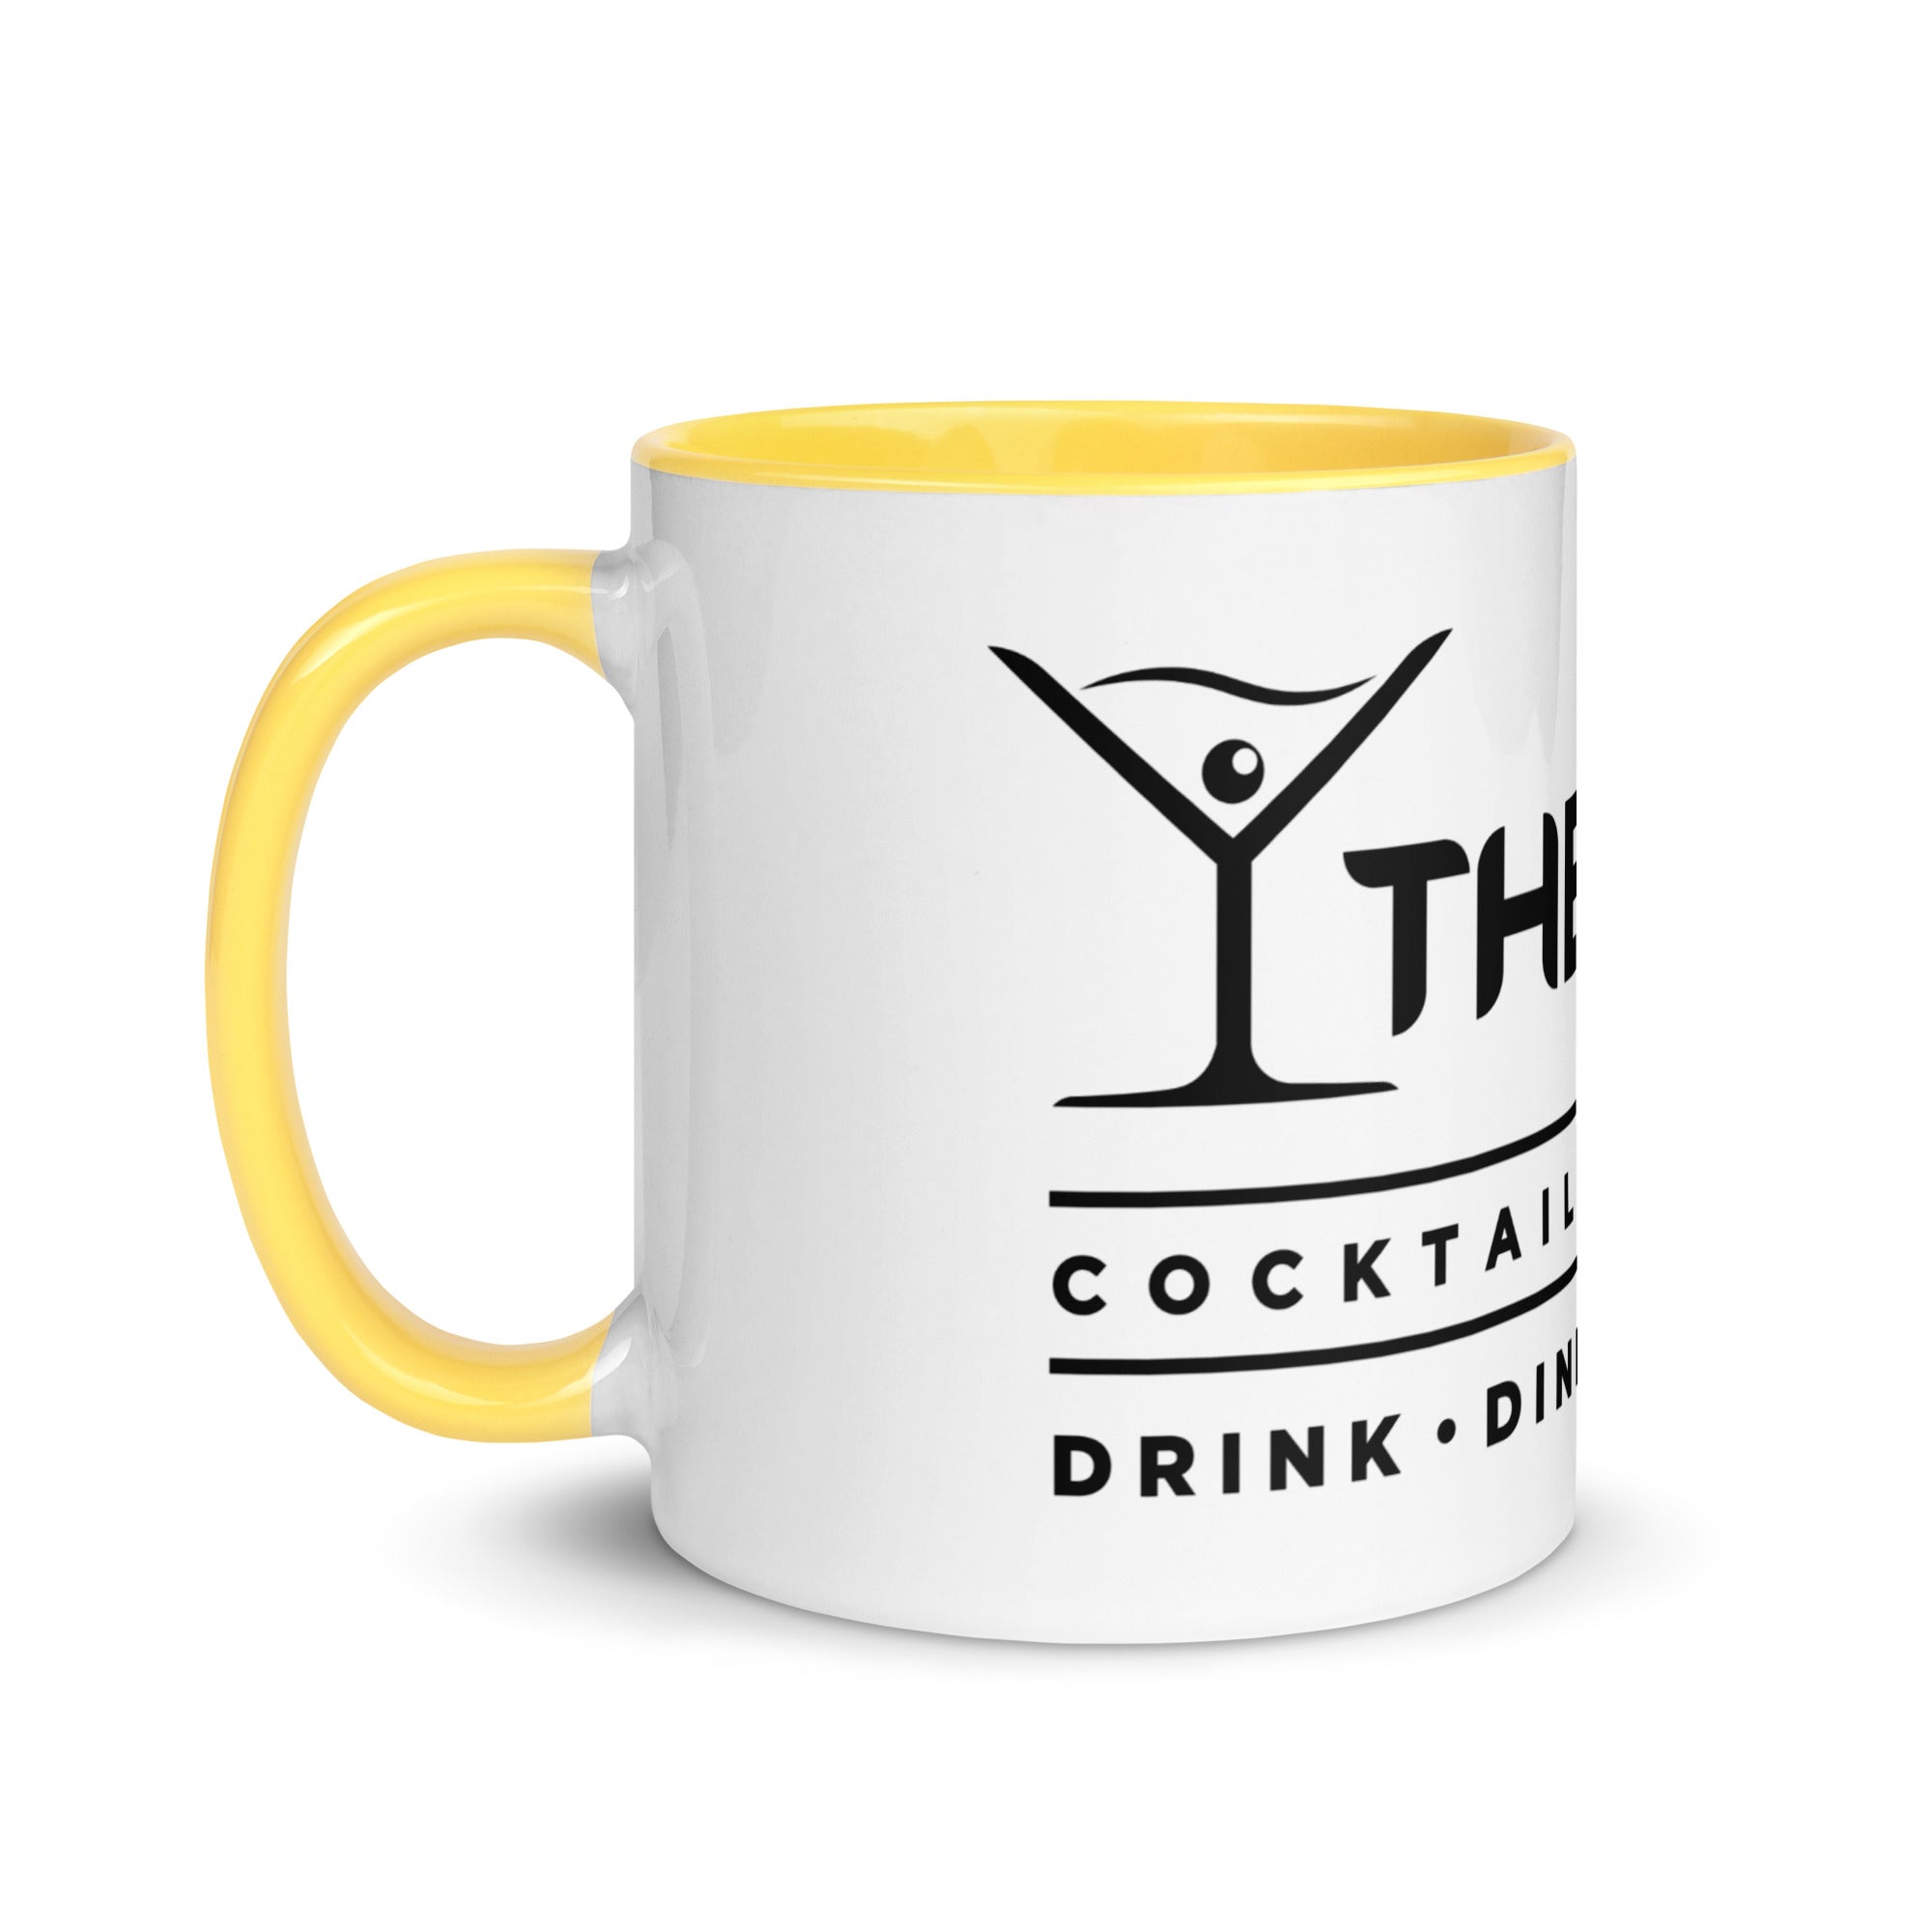 The Drink Official Mug